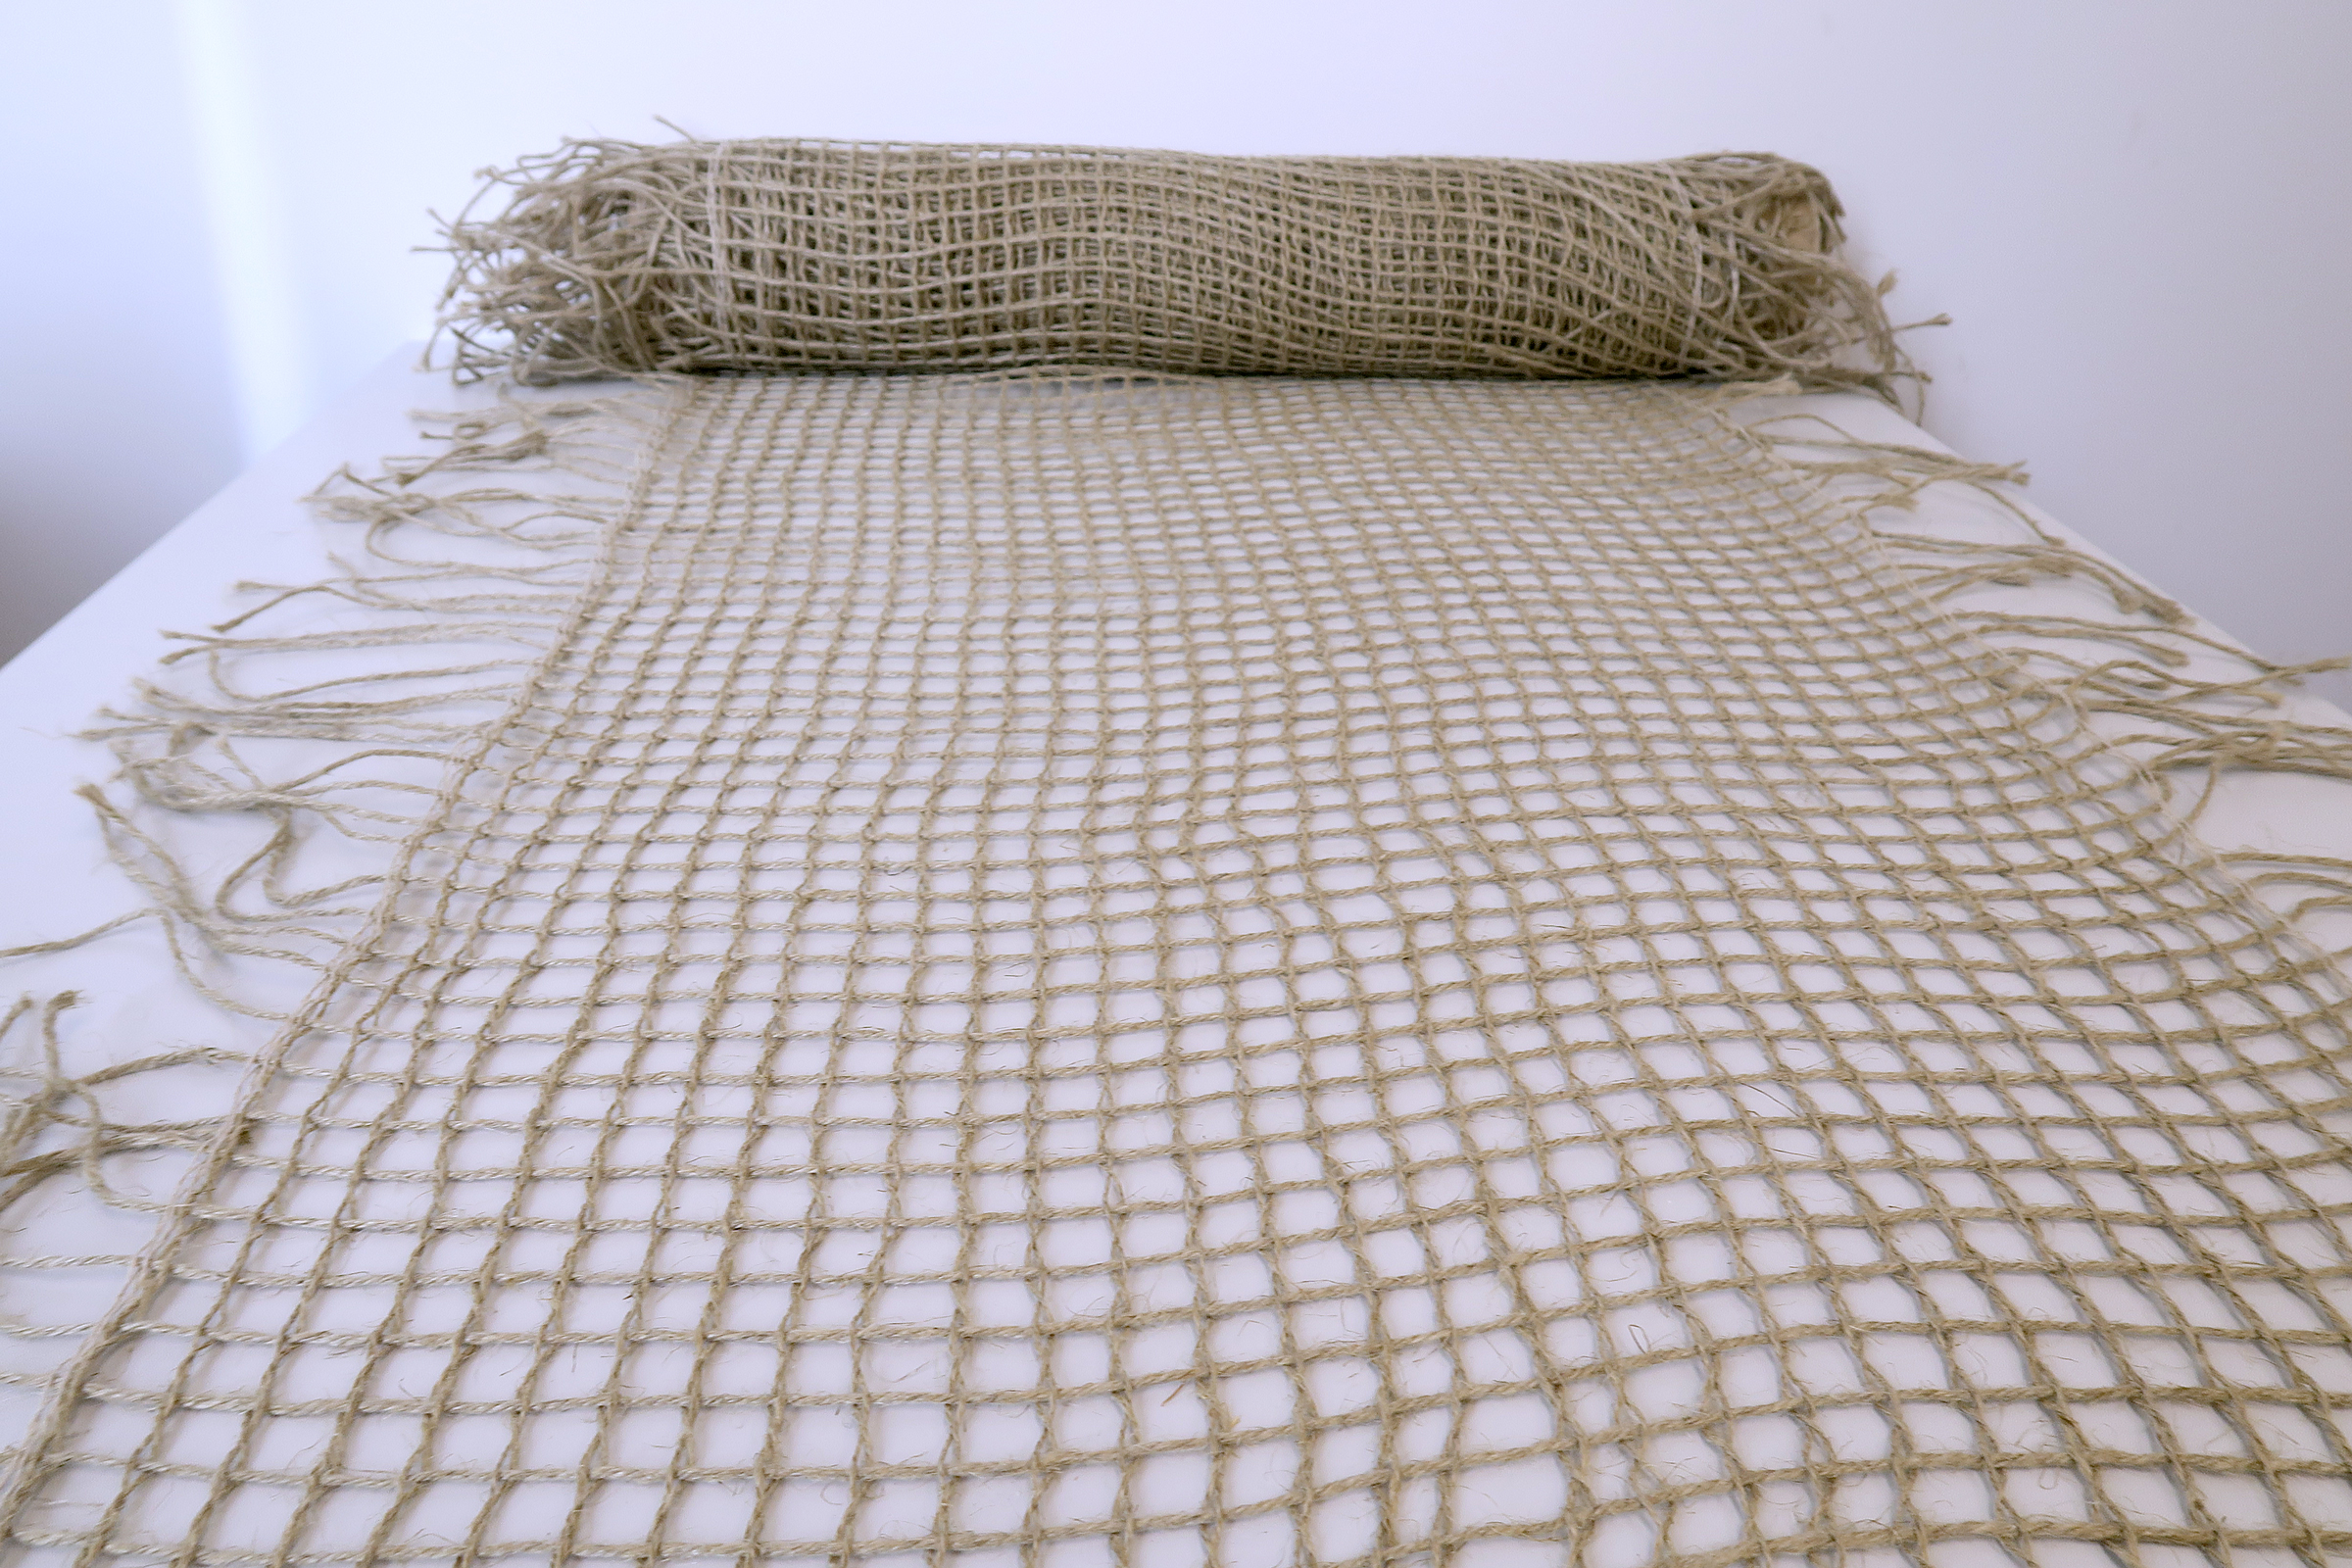 The photo shows a latticed flax fabric lying on a table.